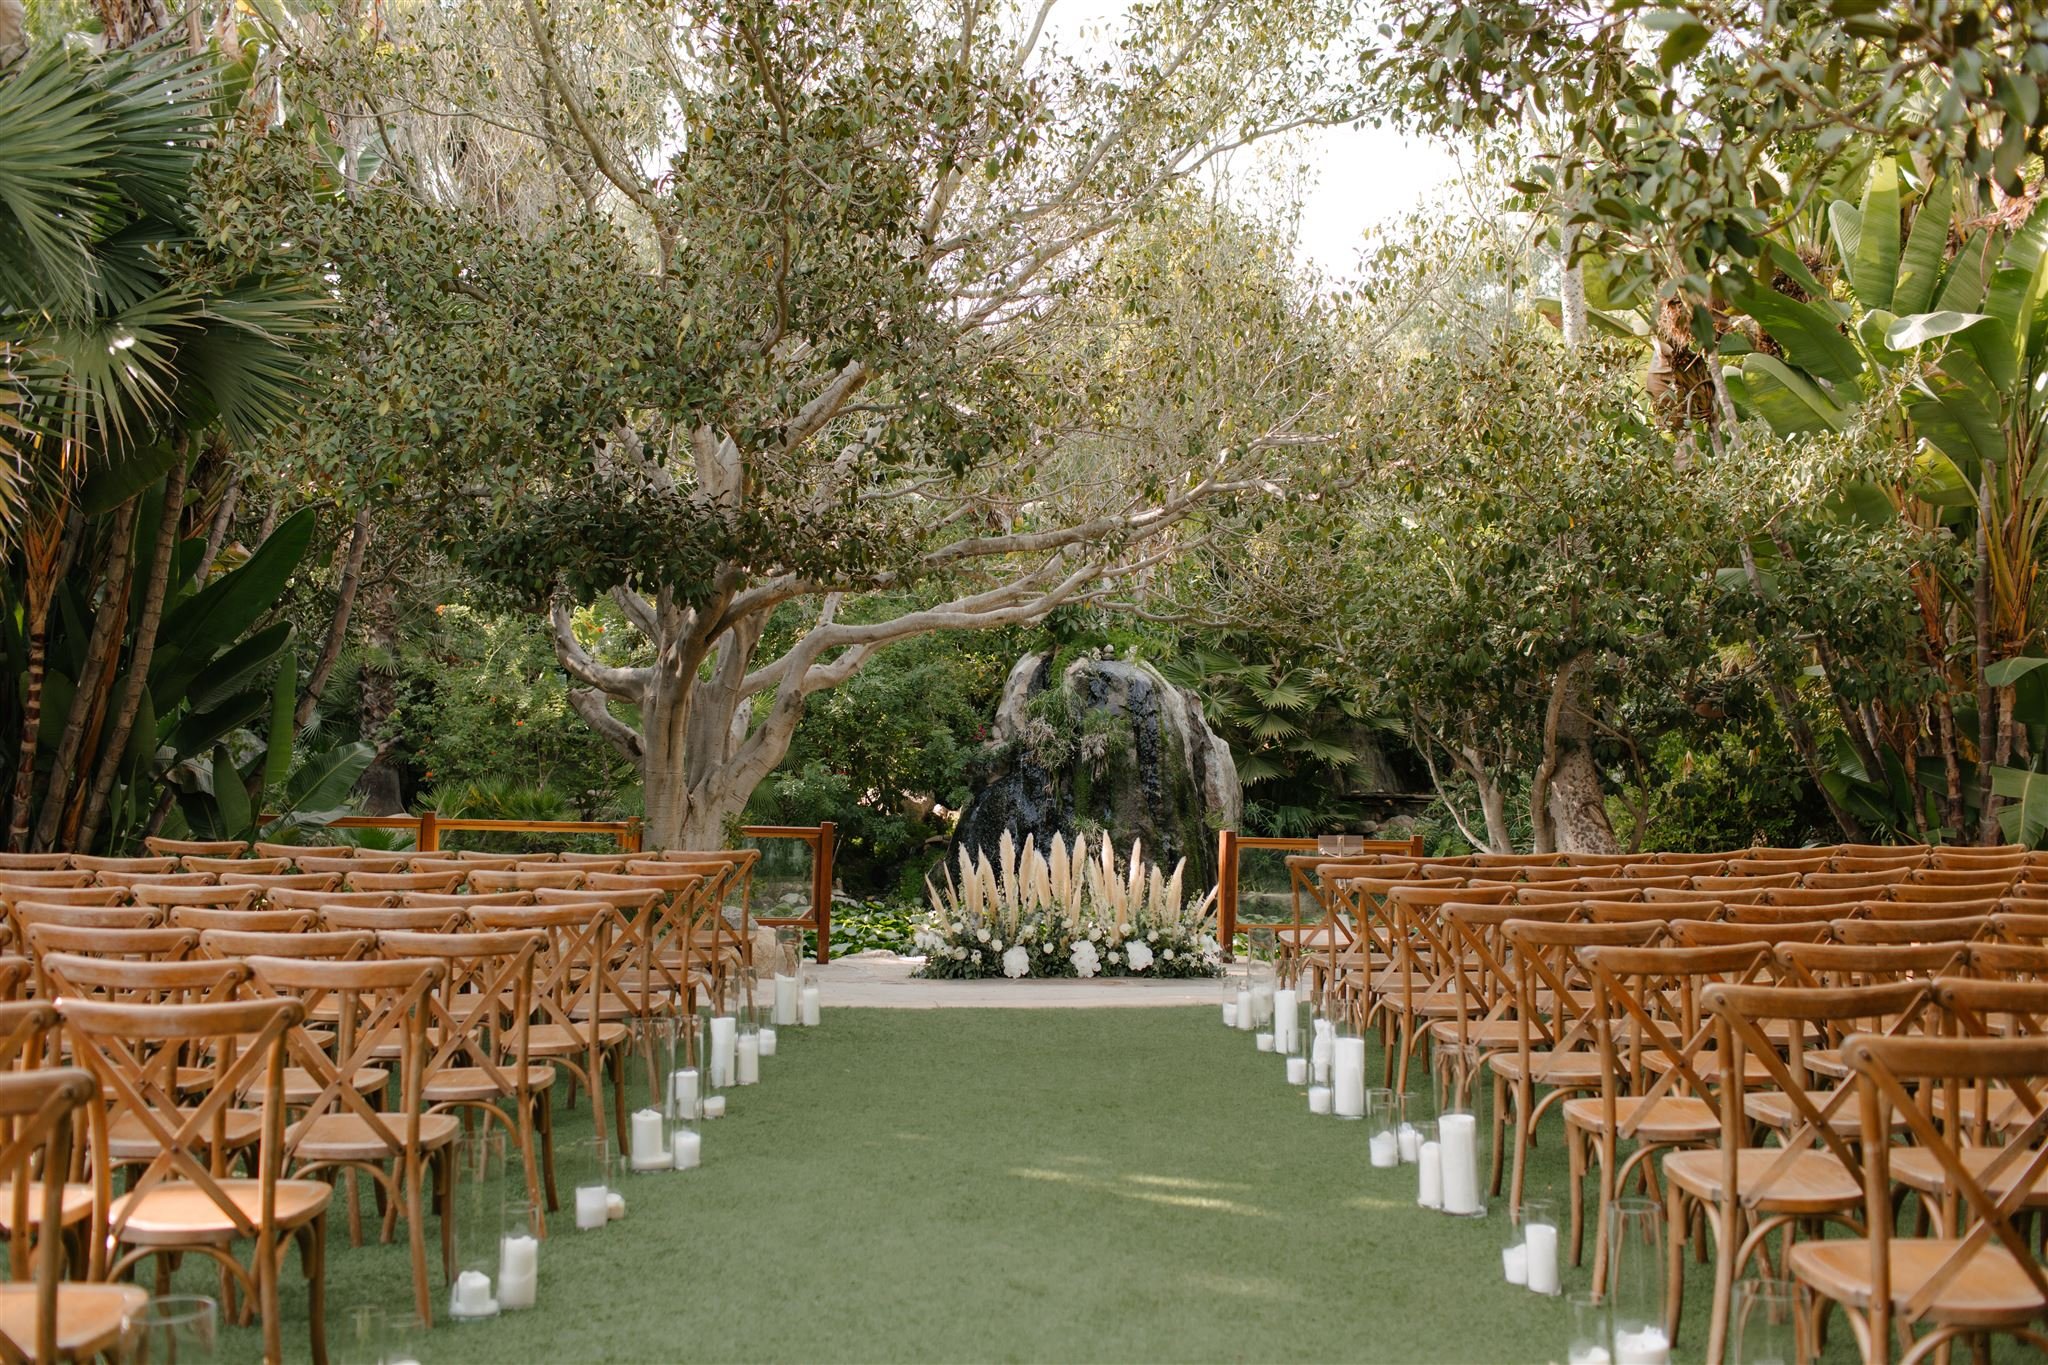 southern-california-wedding-venue-socal-garden-lush-greenery-san-diego-venue-palms-botanica-trademark-brown-crossback-chairs